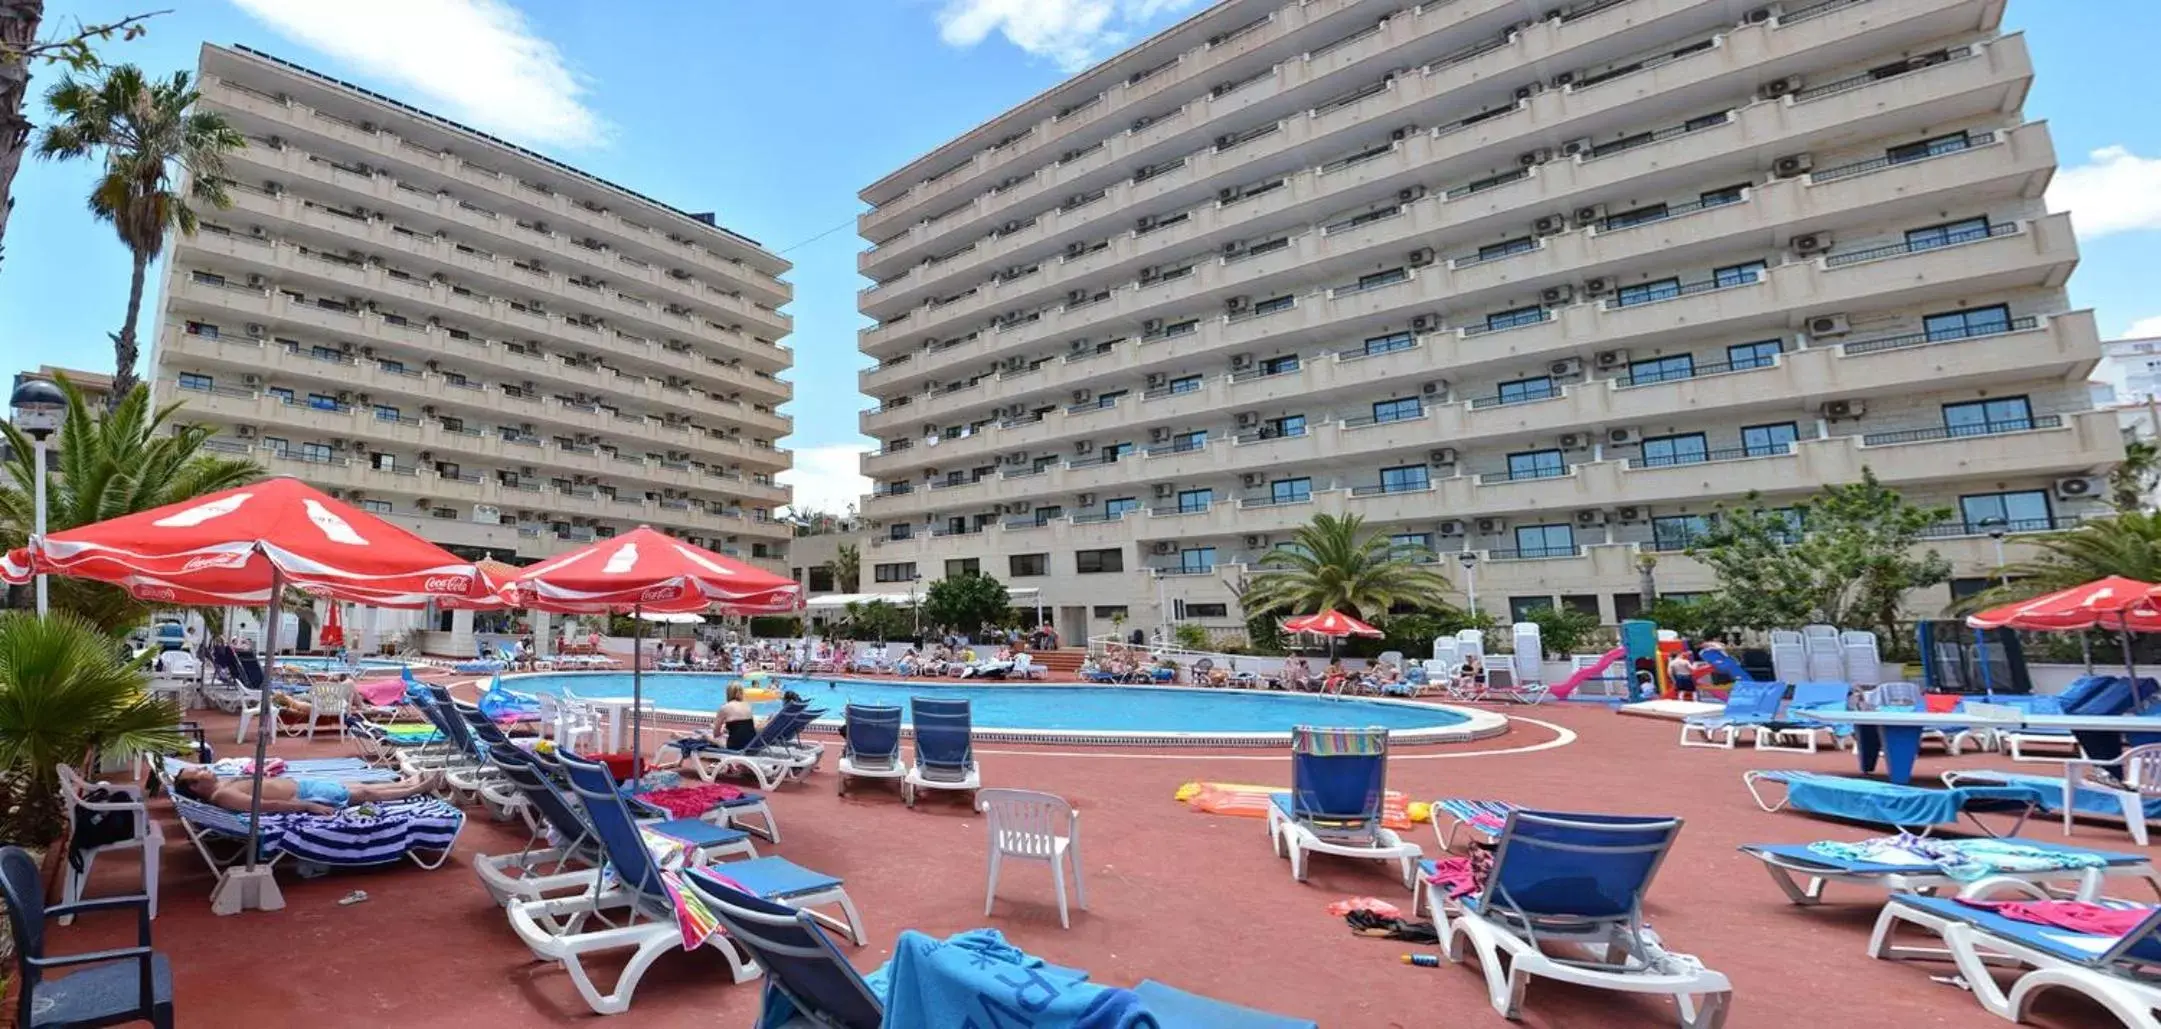 Swimming pool in Hotel Playas de Torrevieja